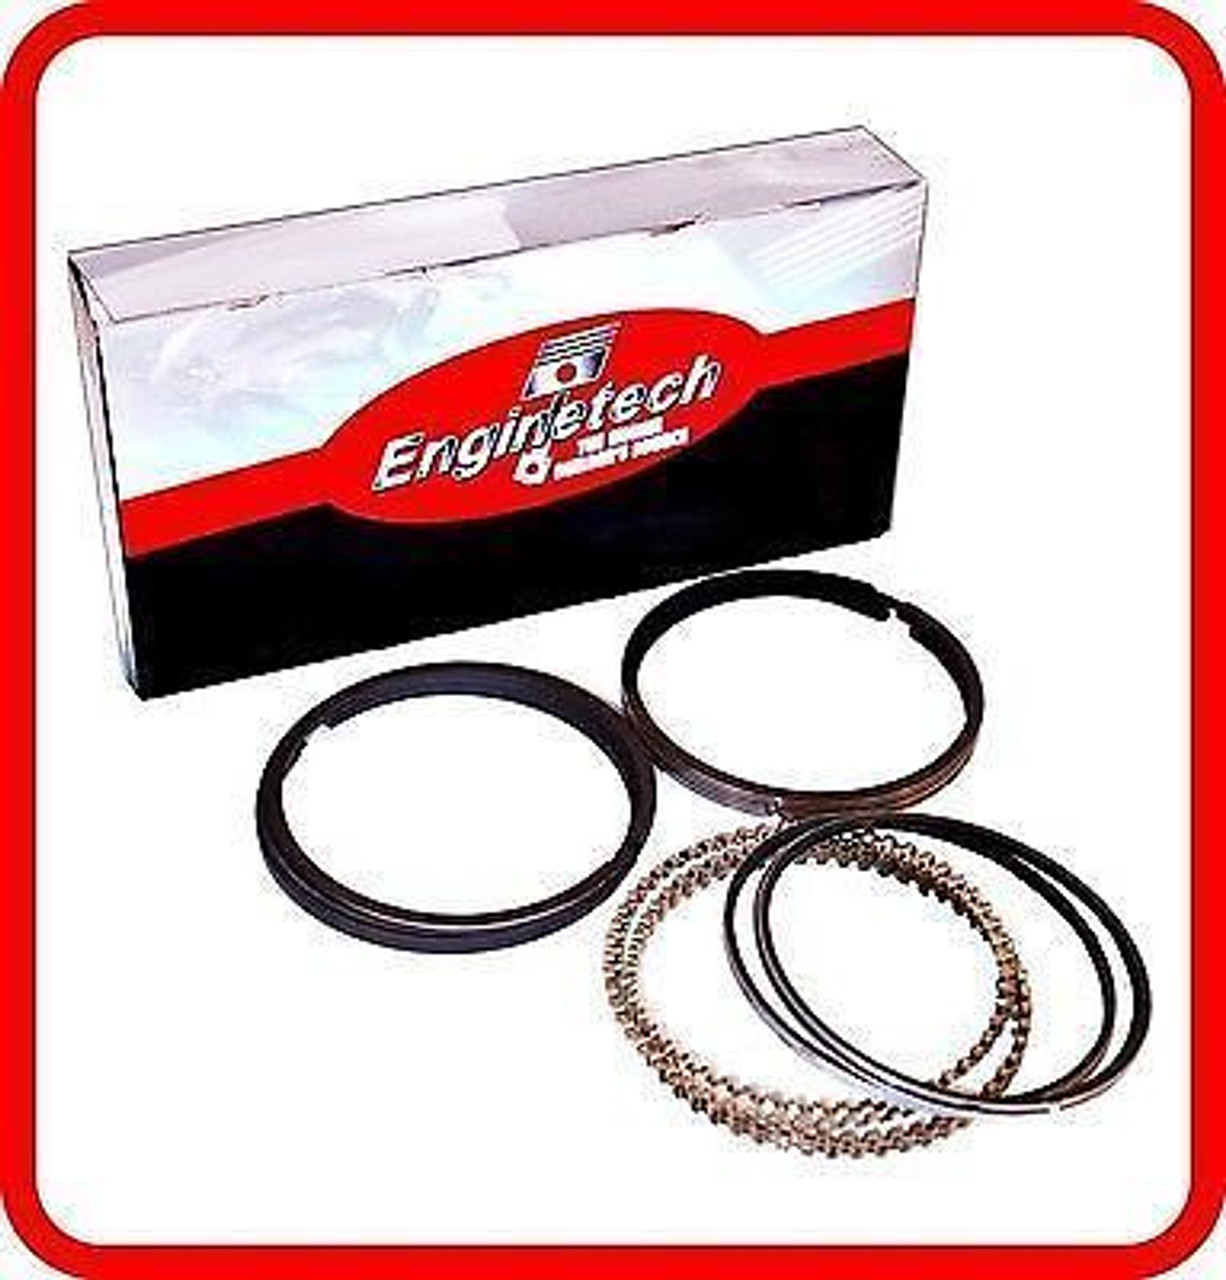 Engine Piston Ring Set - Kit Part - S86124